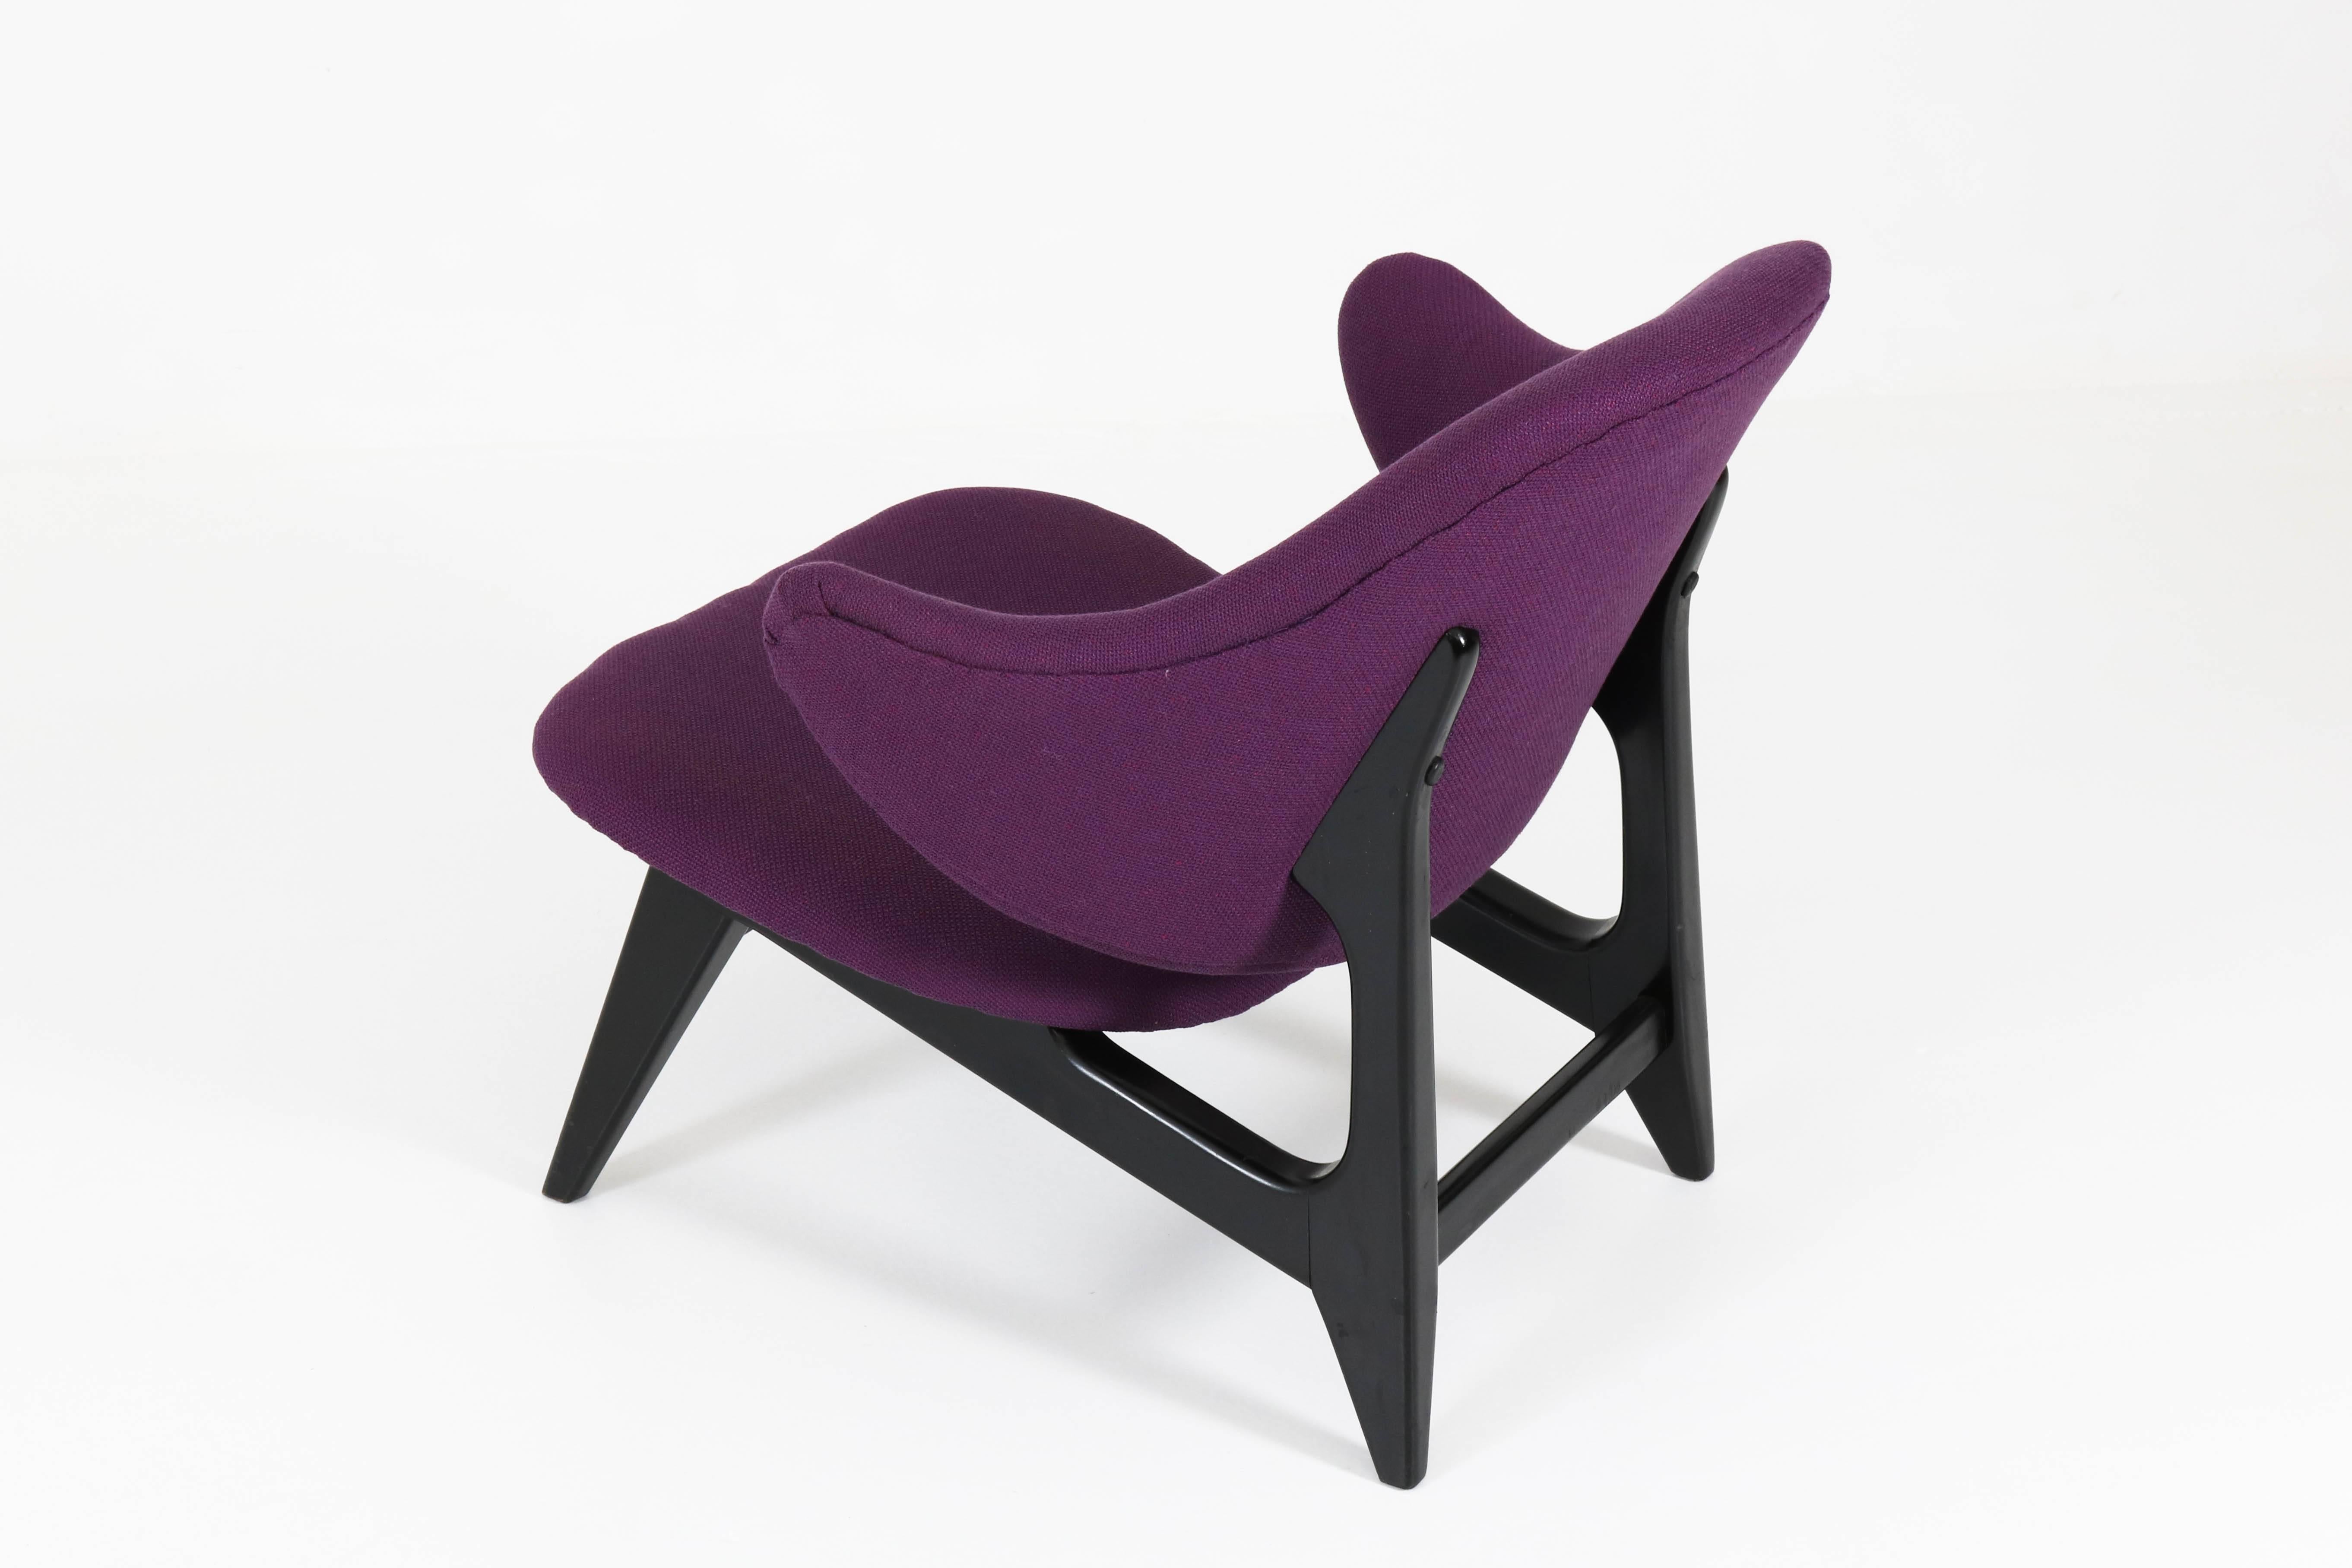 Mid-20th Century Dutch Mid-Century Modern Lounge Chair by Louis Van Teeffelen for WeBe, 1960s